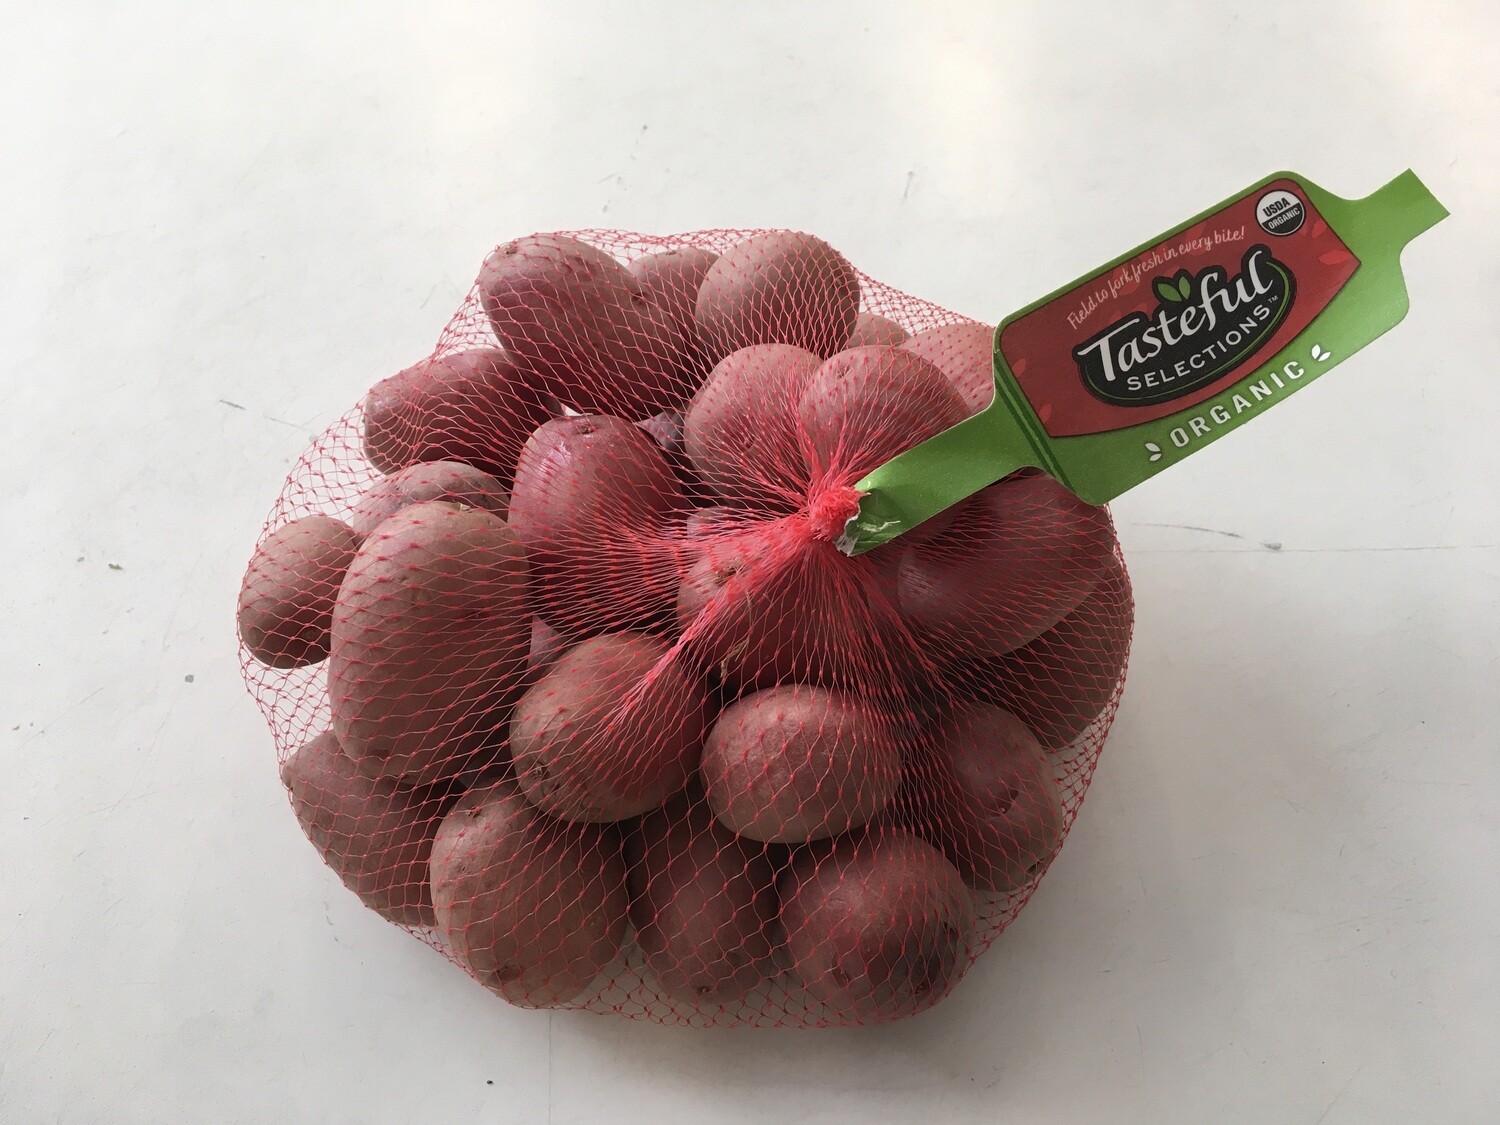 Produce / Vegetable / Organic Baby Red Potato, 1.5 lb bag